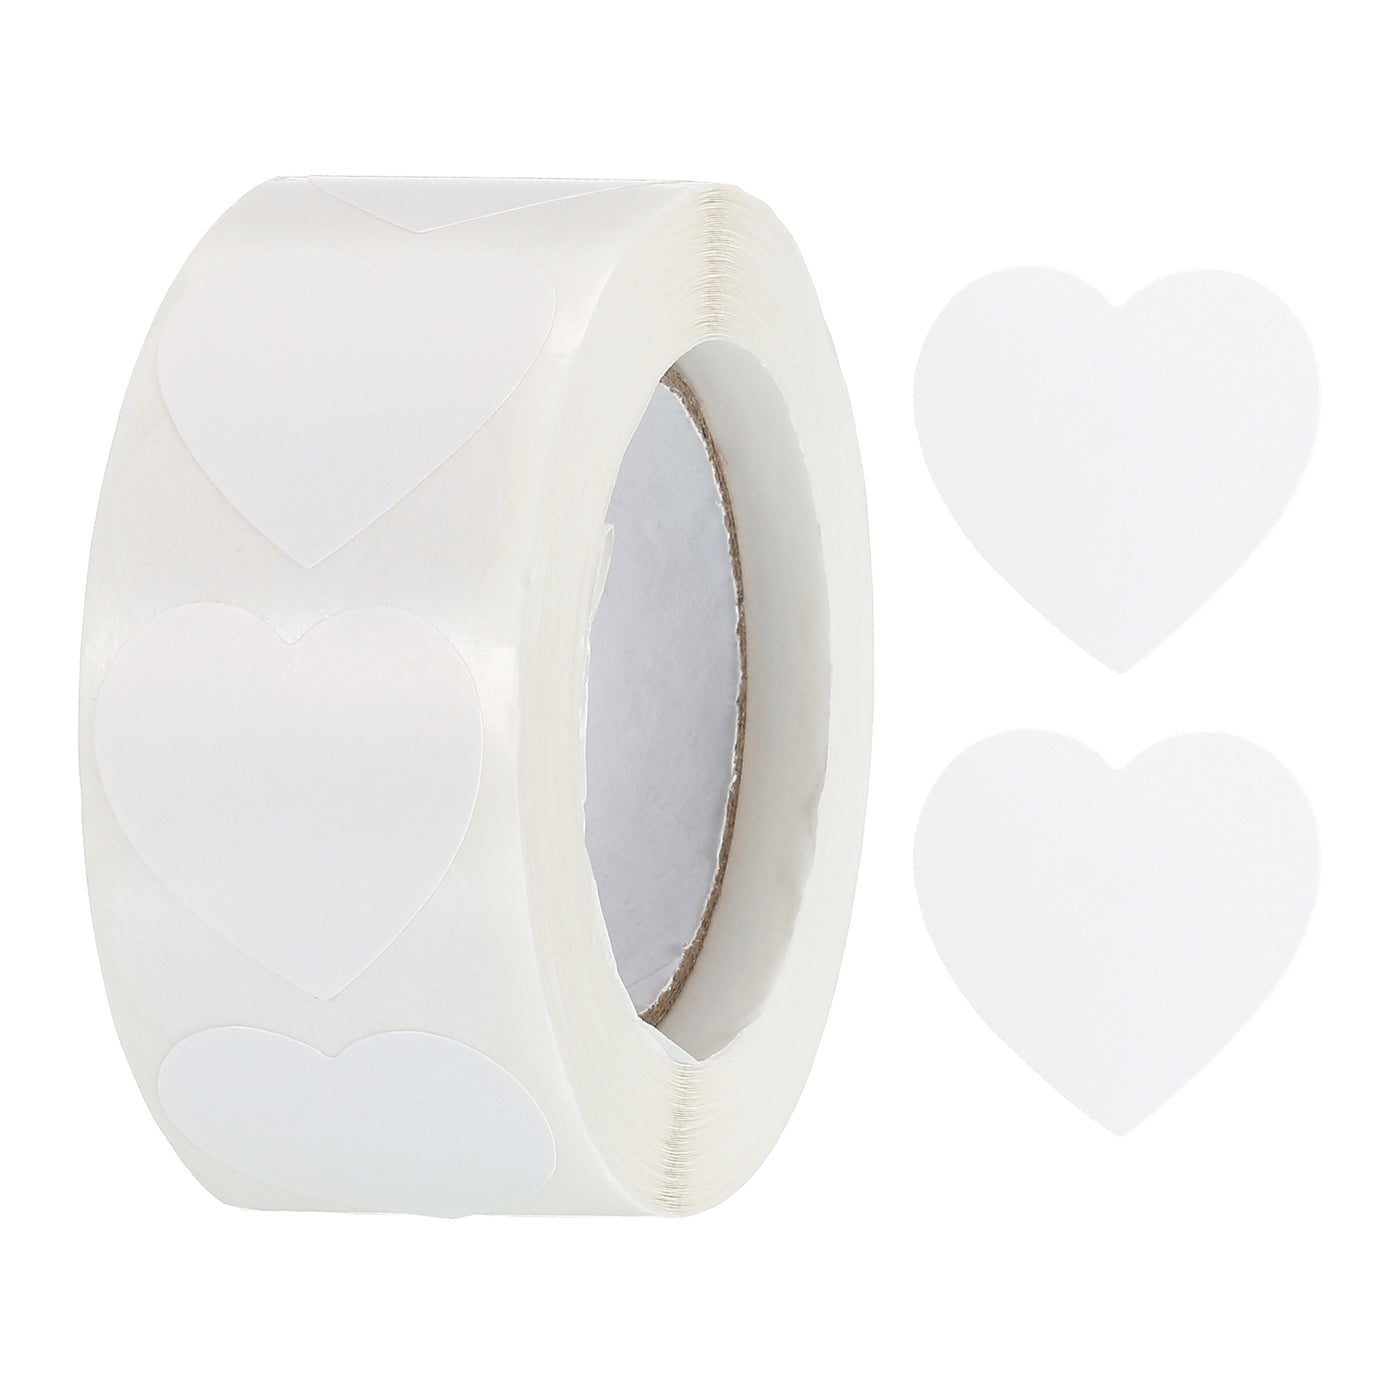 Harfington Heart Shaped Sticker 1" Self-Adhesive Love Label White 500 Pcs